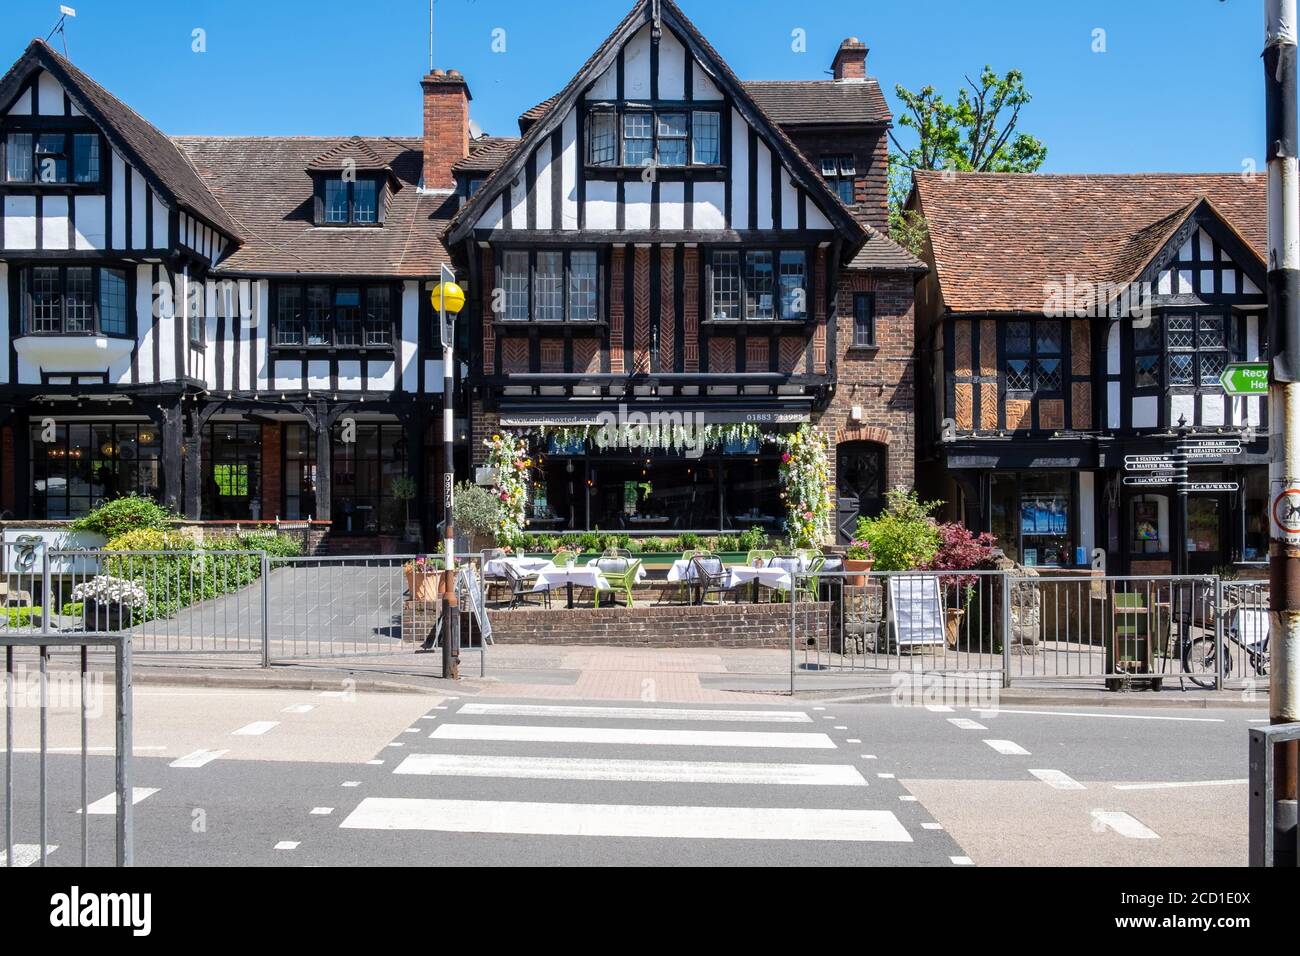 Zebra Crossing et demi-boutiques à colombages, Oxted, Surrey, Angleterre, GB Banque D'Images